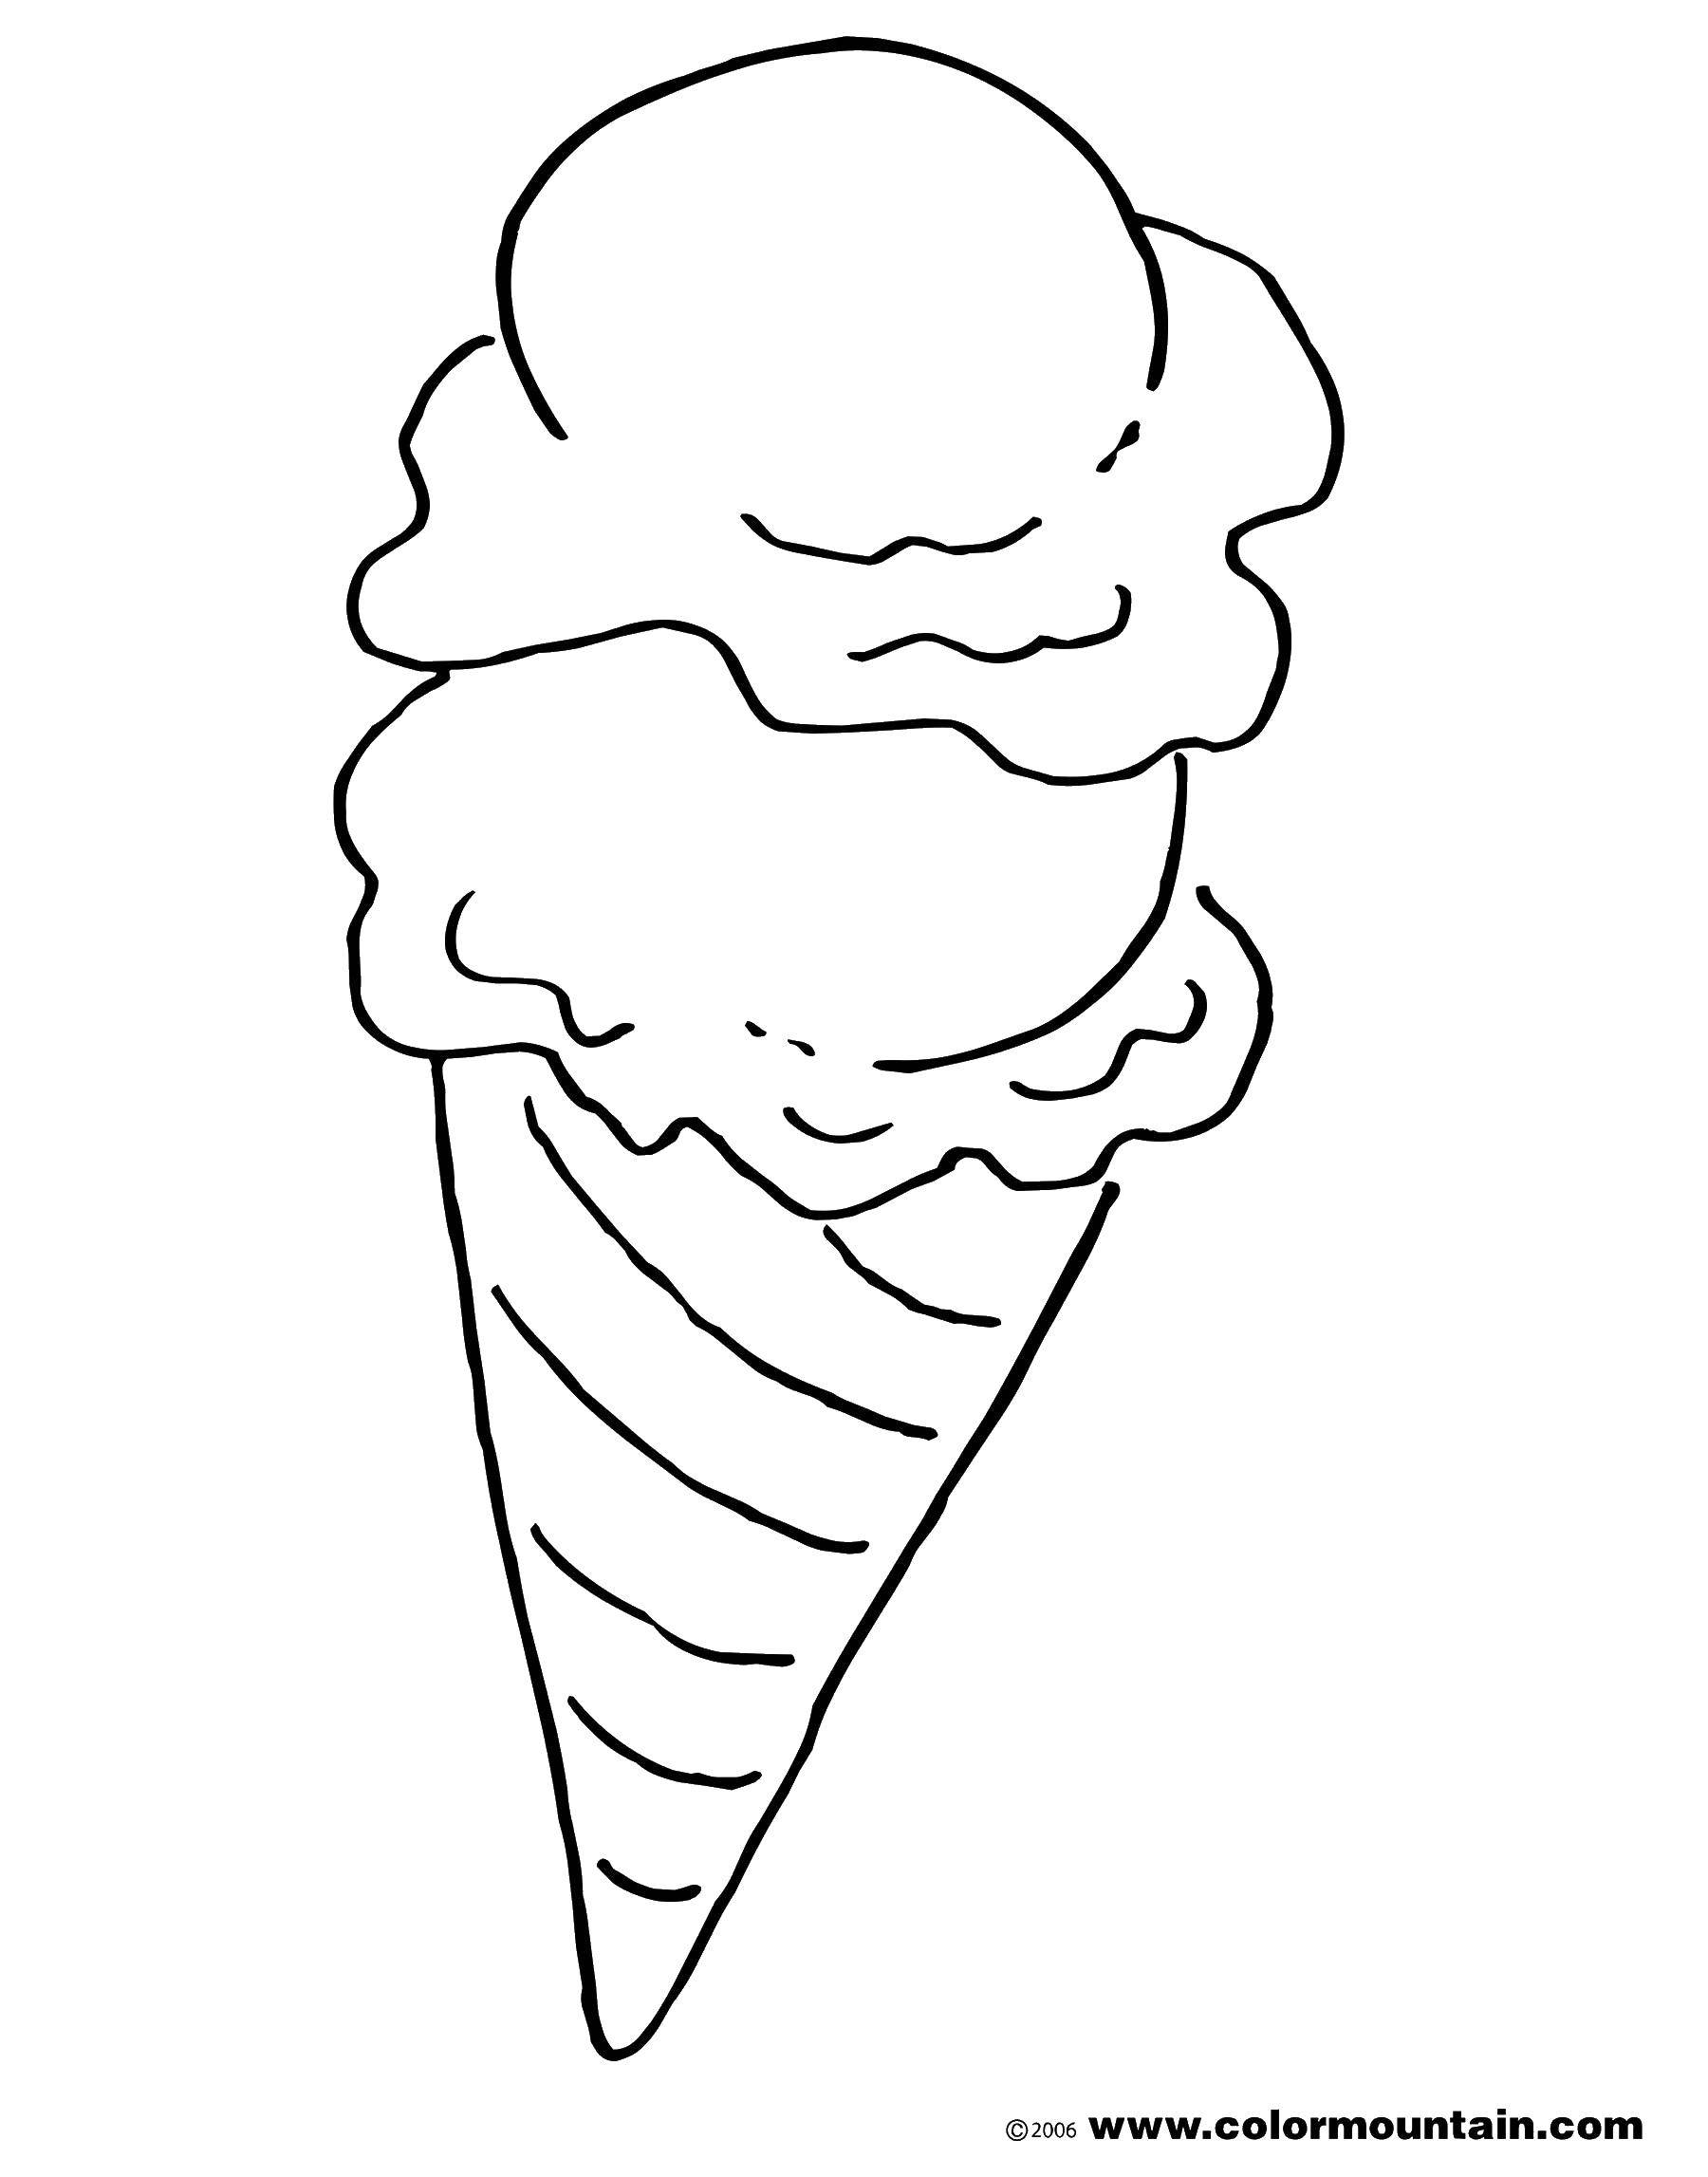 Название: Раскраска Две ложки мороженого. Категория: мороженое. Теги: Мороженое, сладость, дети.